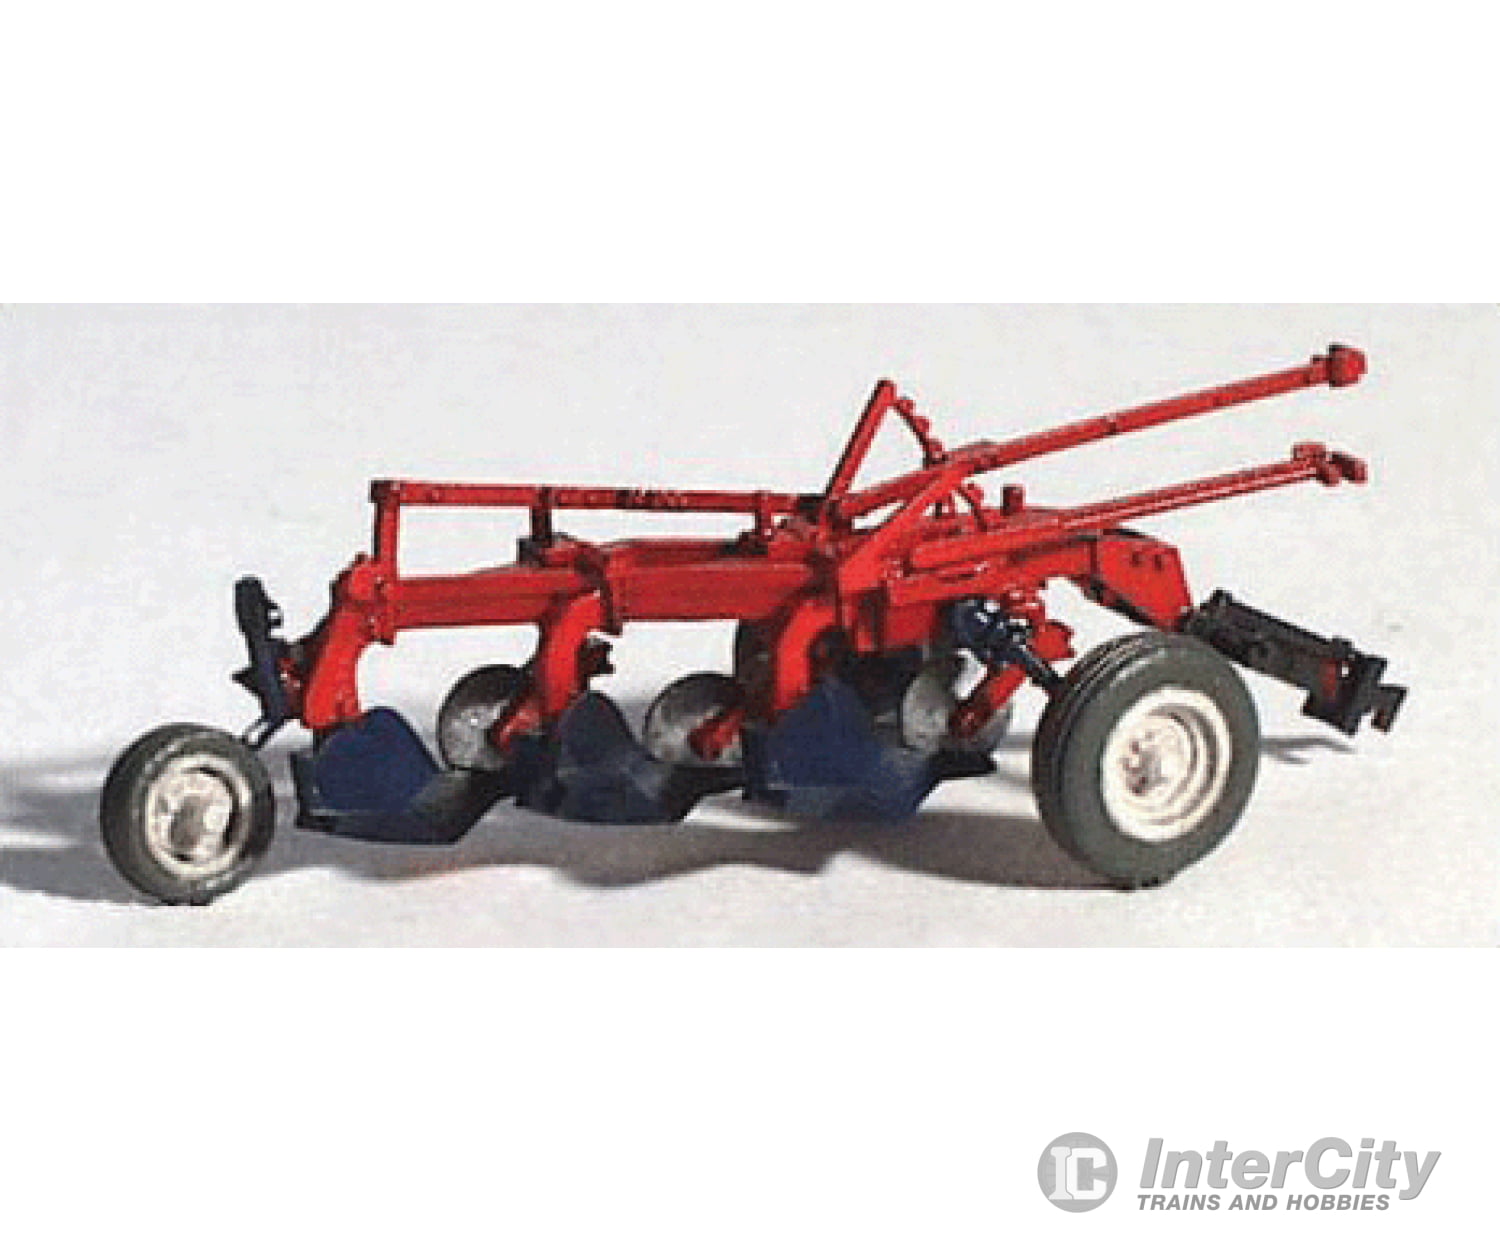 Ghq Ho 60003 Farm Machinery (Unpainted Metal Kit) -- ’Red’ Little Gem 3-Bottom Plow Cars & Trucks